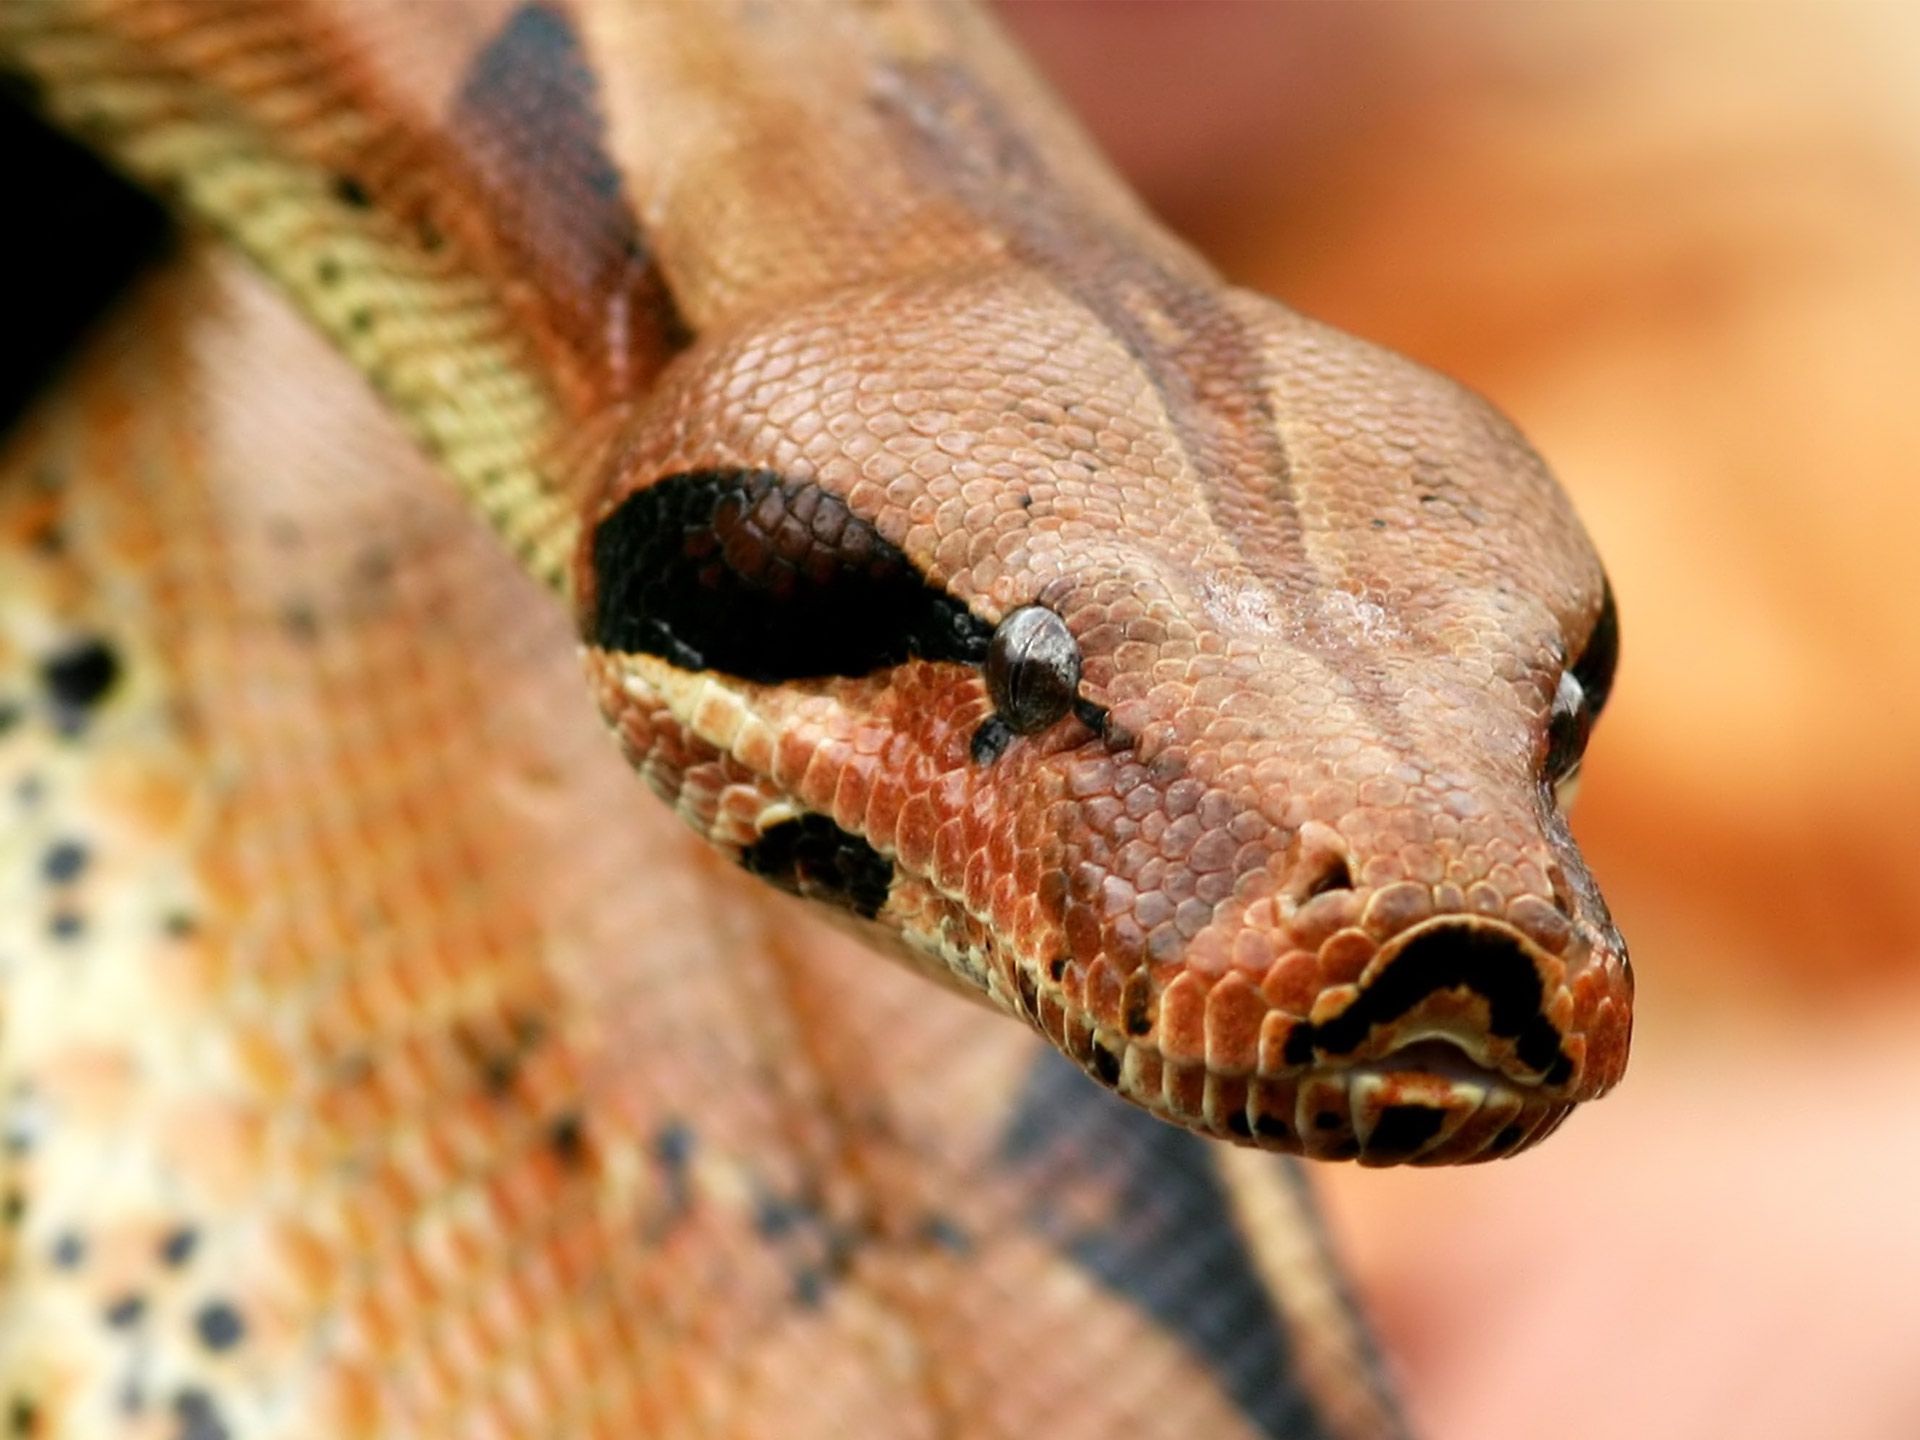 Python HD snake wallpaper download free